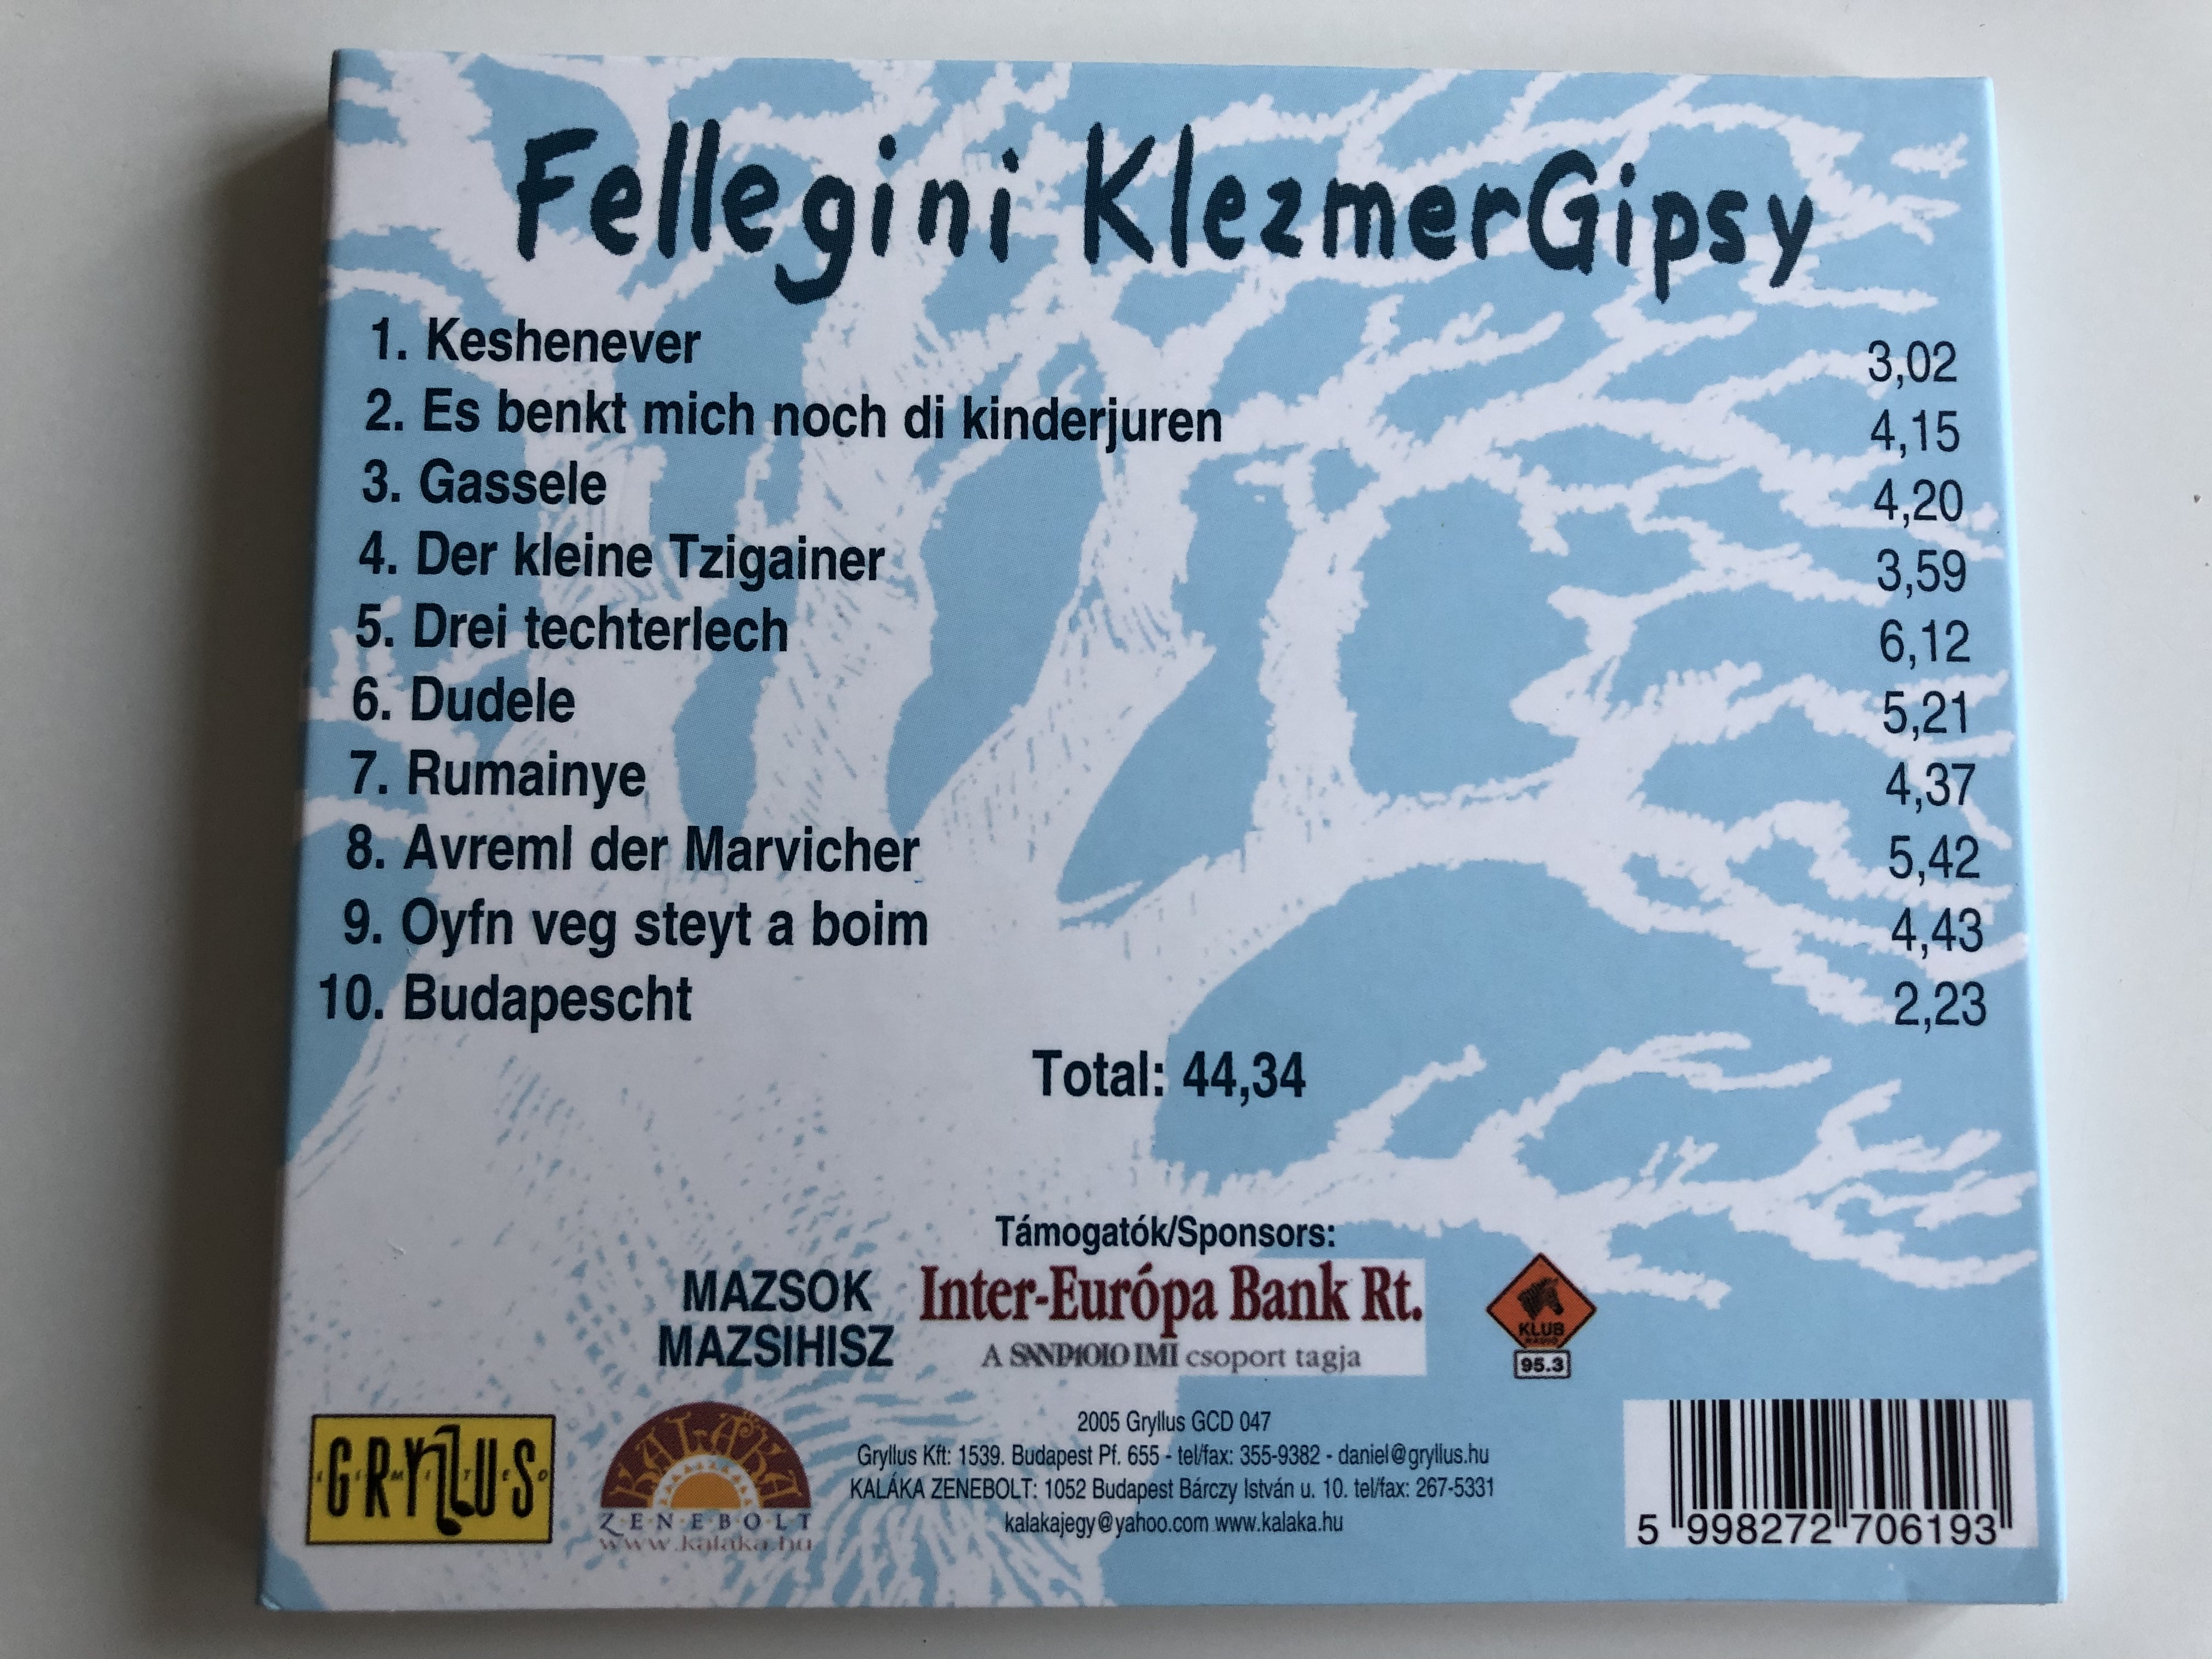 fellegini-klezmer-gipsy-oyfn-veg-steyt-a-boim-gryllus-audio-cd-2005-gcd-047-6-.jpg